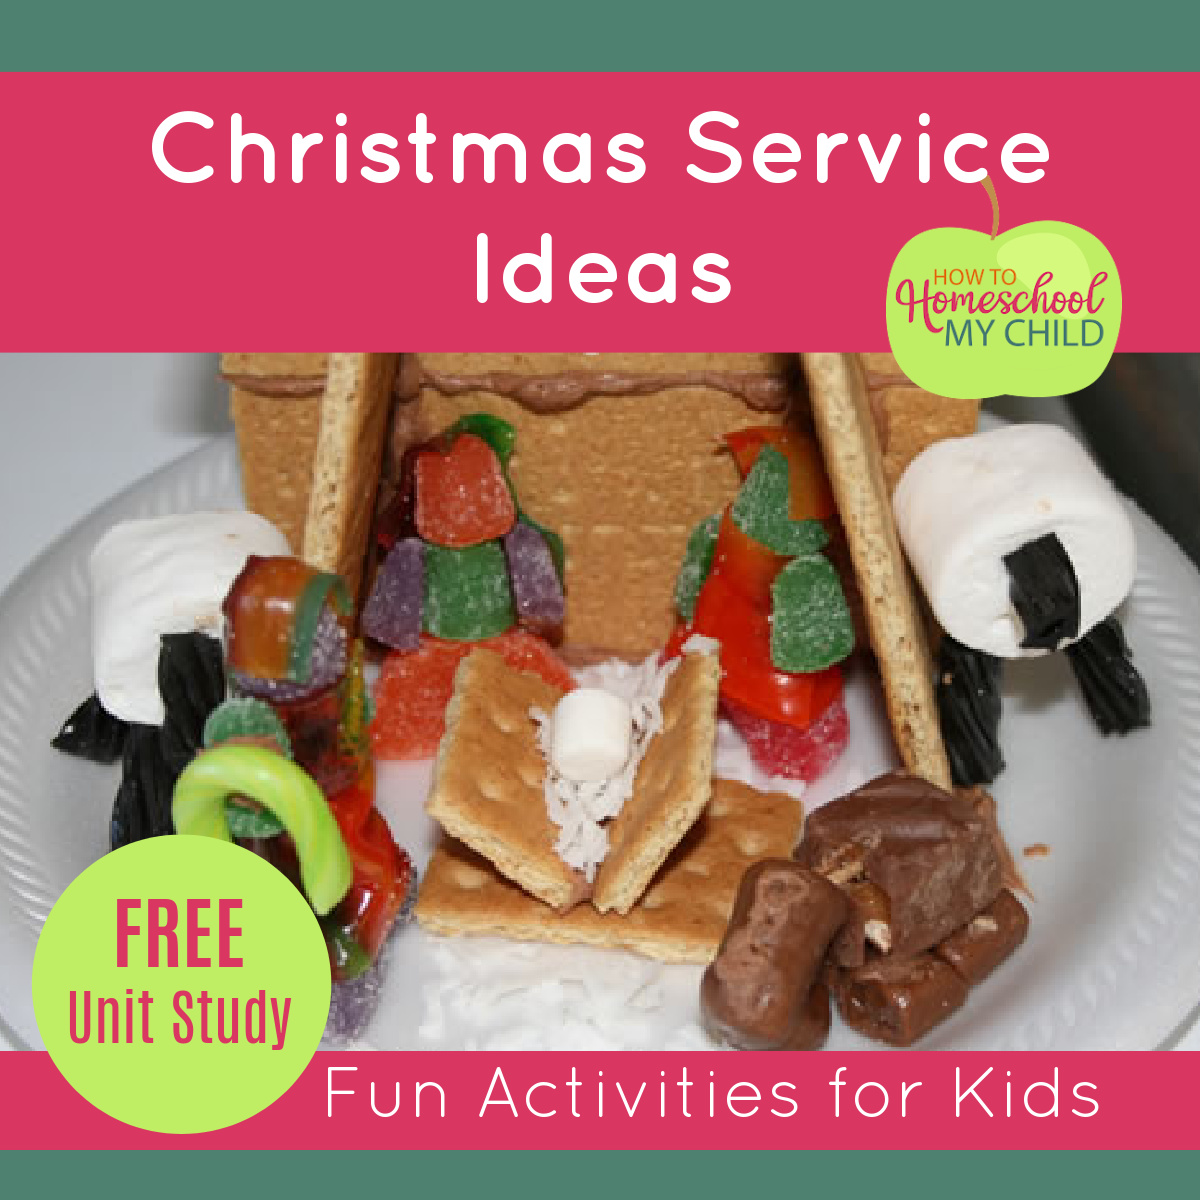 Christmas service ideas & FREE Christmas Unit Study